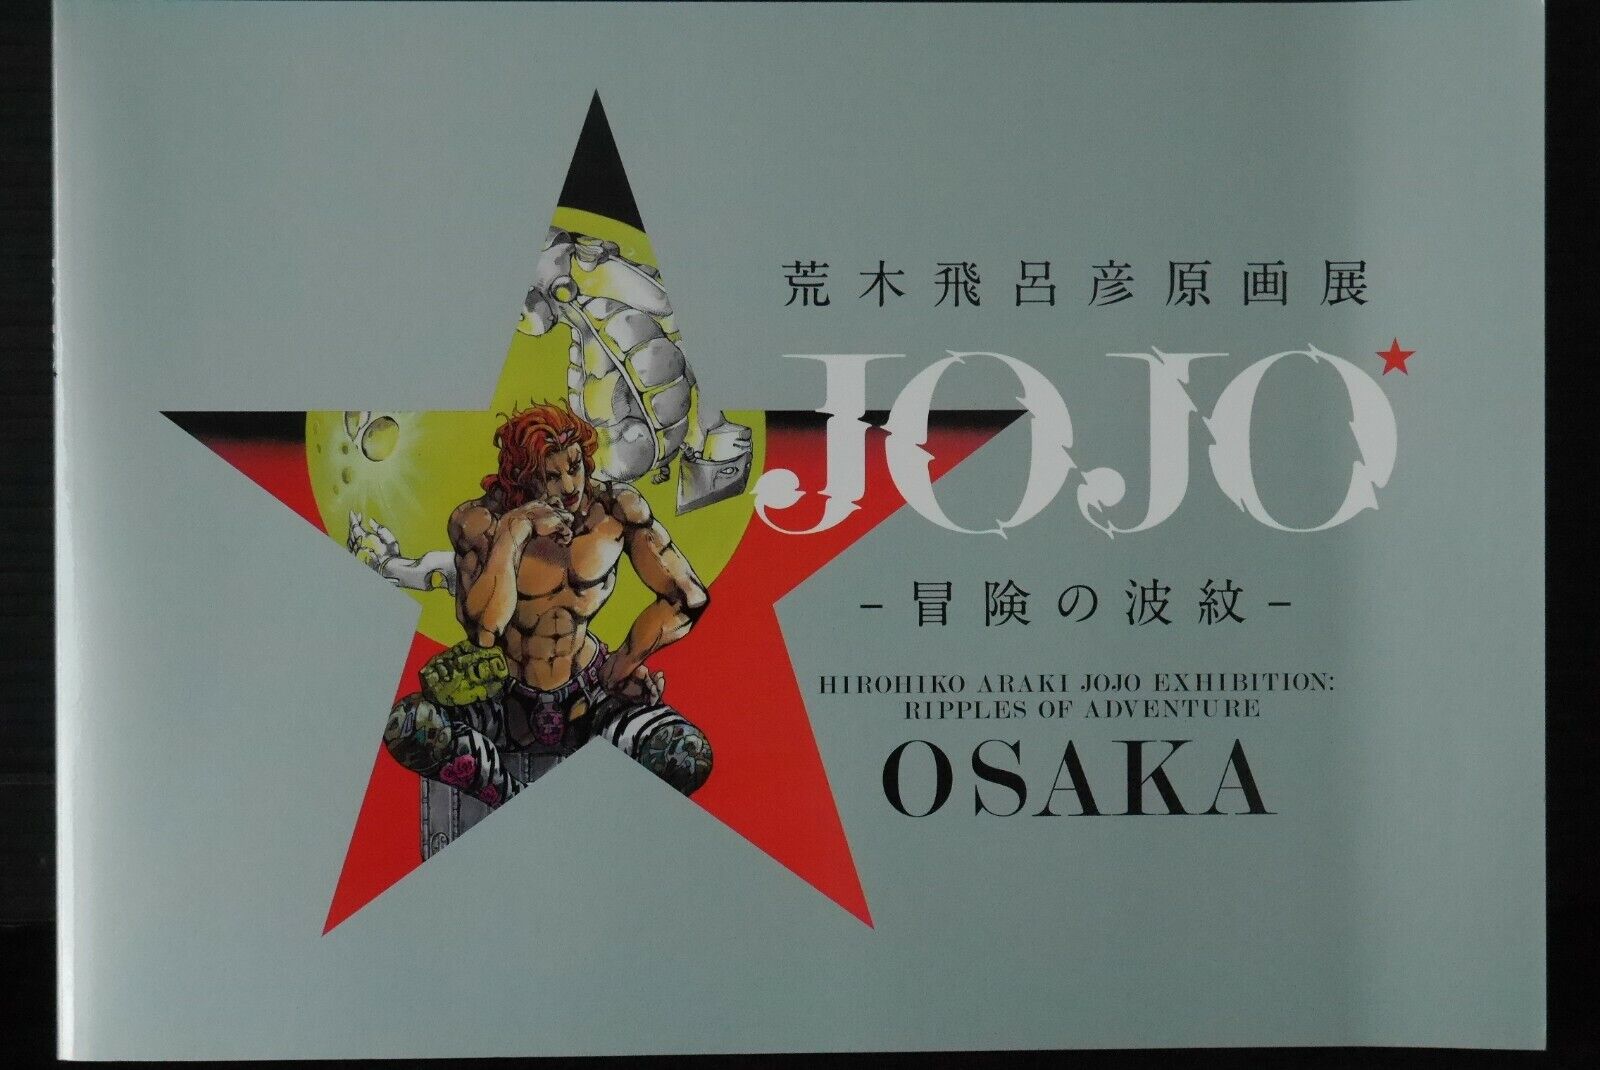 JAPAN Hirohiko Araki JoJo Exhibition: Ripples of Adventure OSAKA Pictorial R